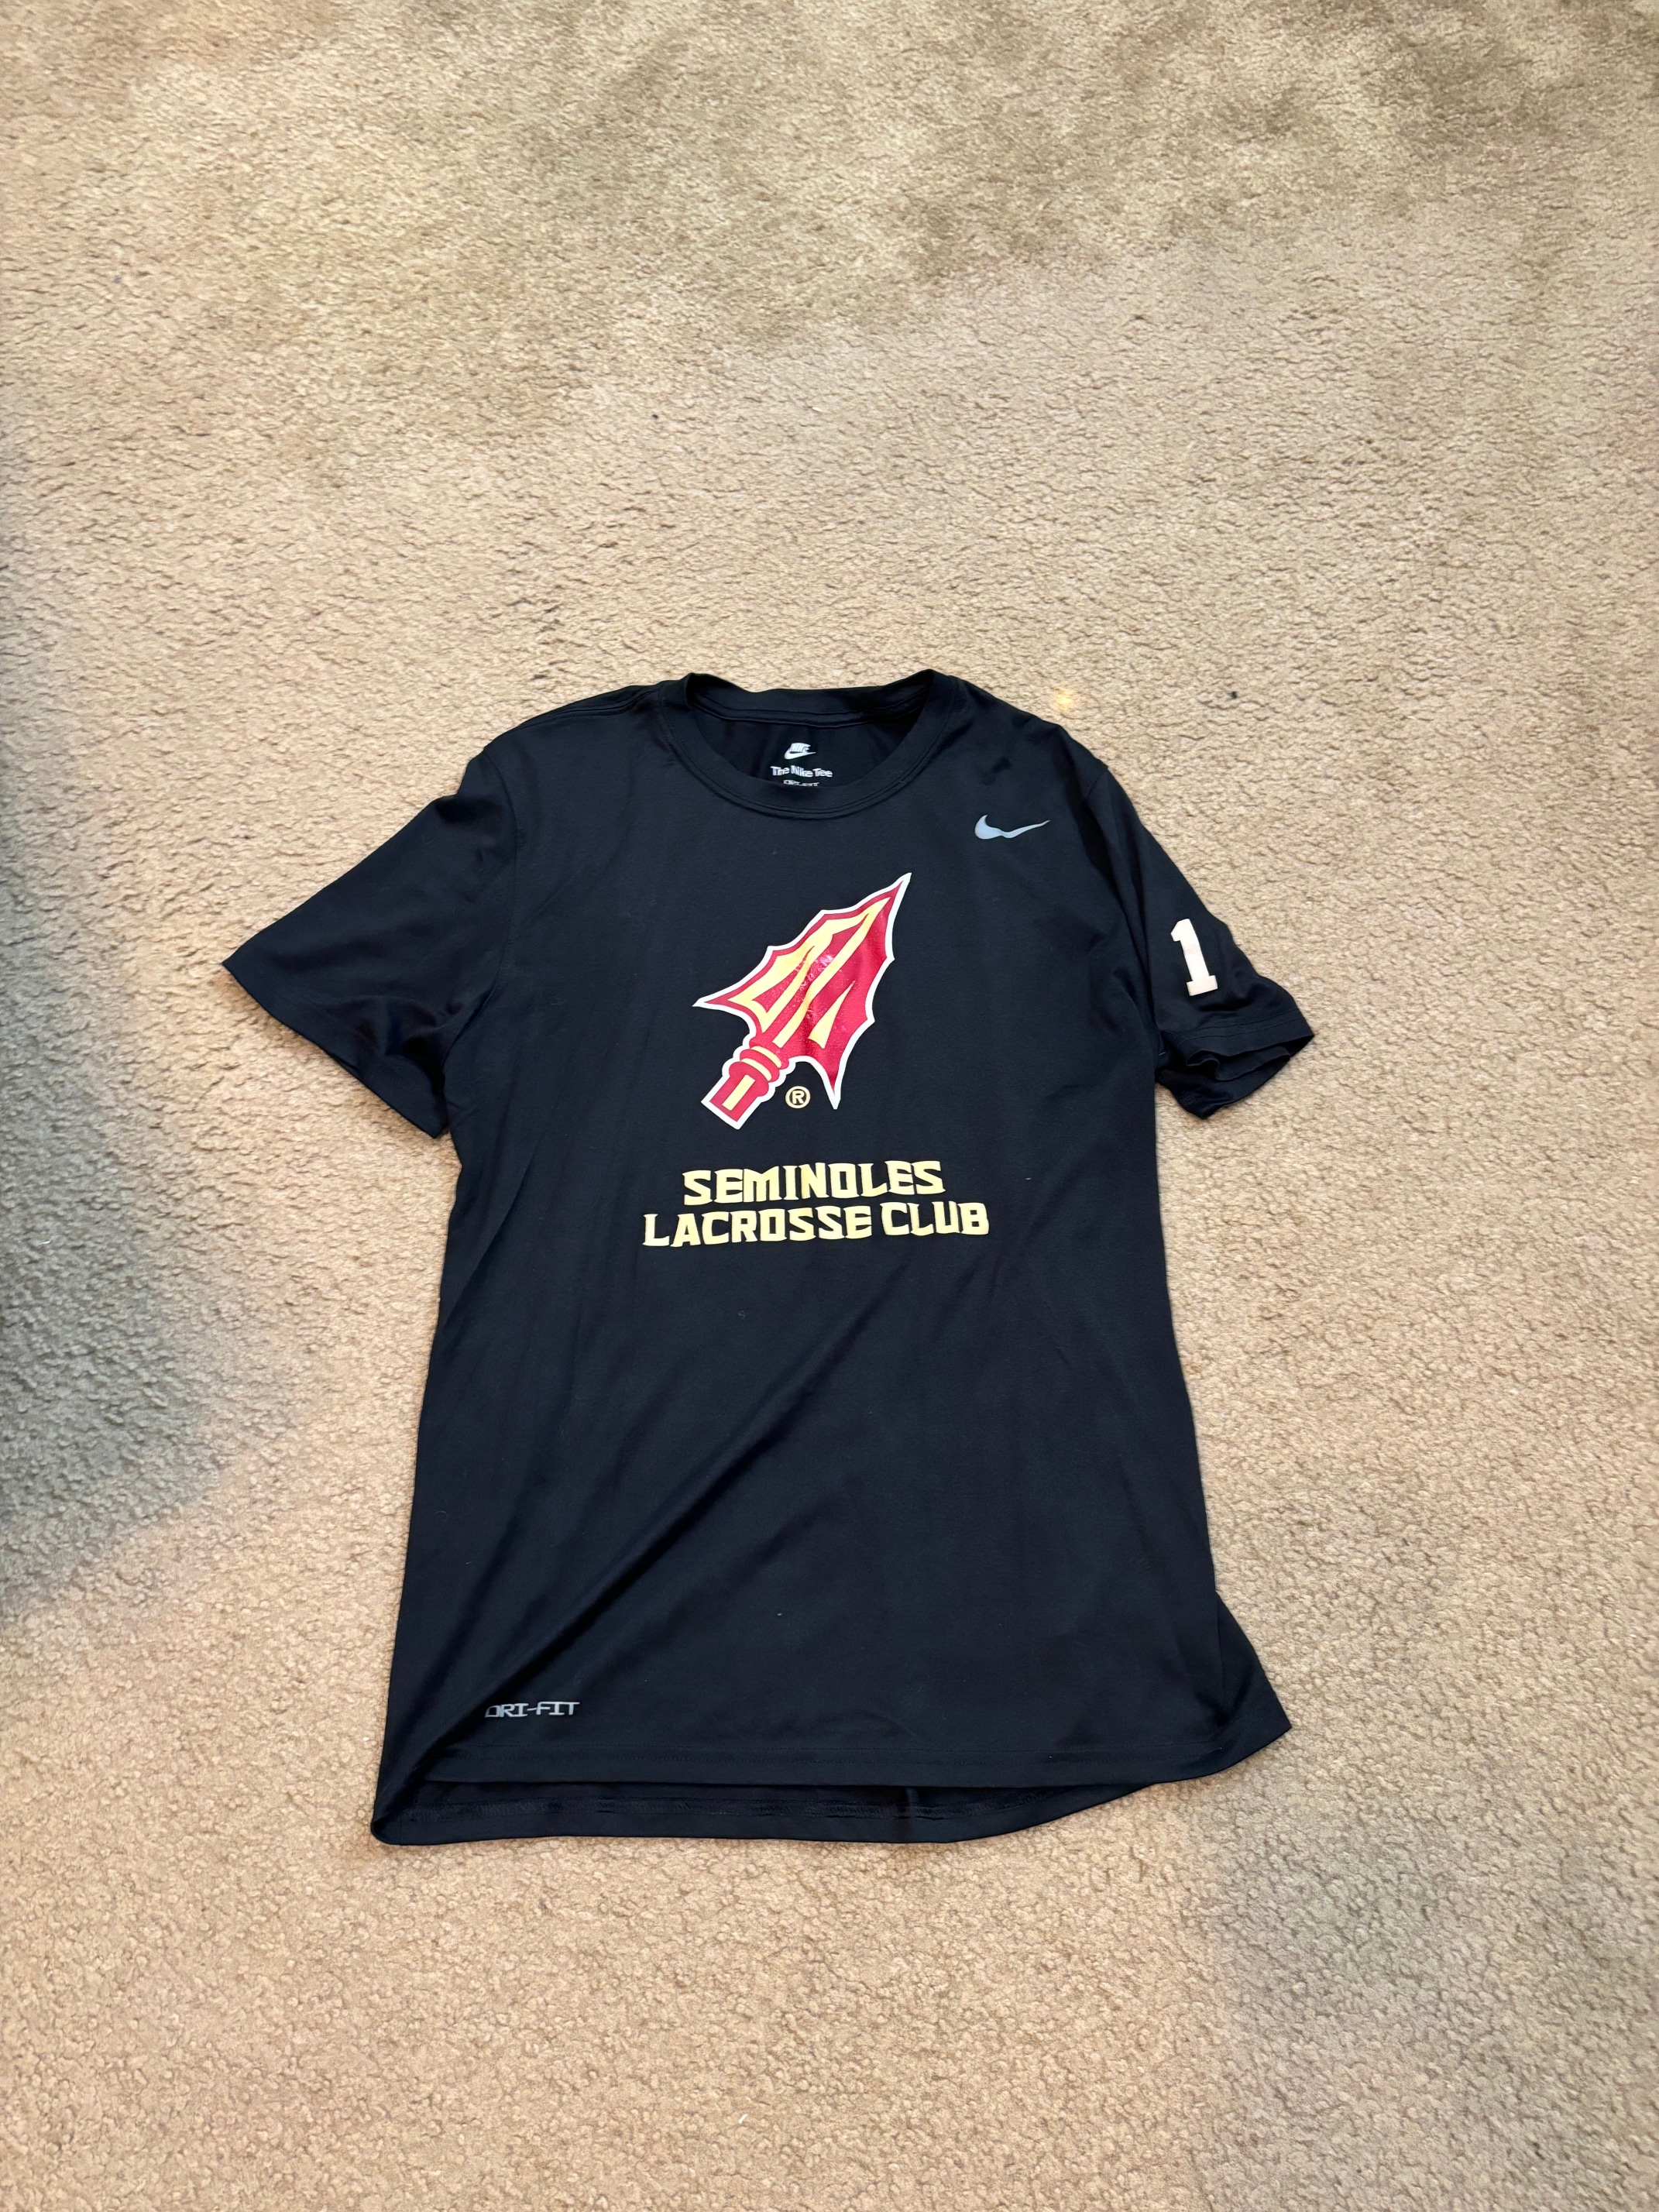 FSU Lacrosse shooter shirt #1 team issued